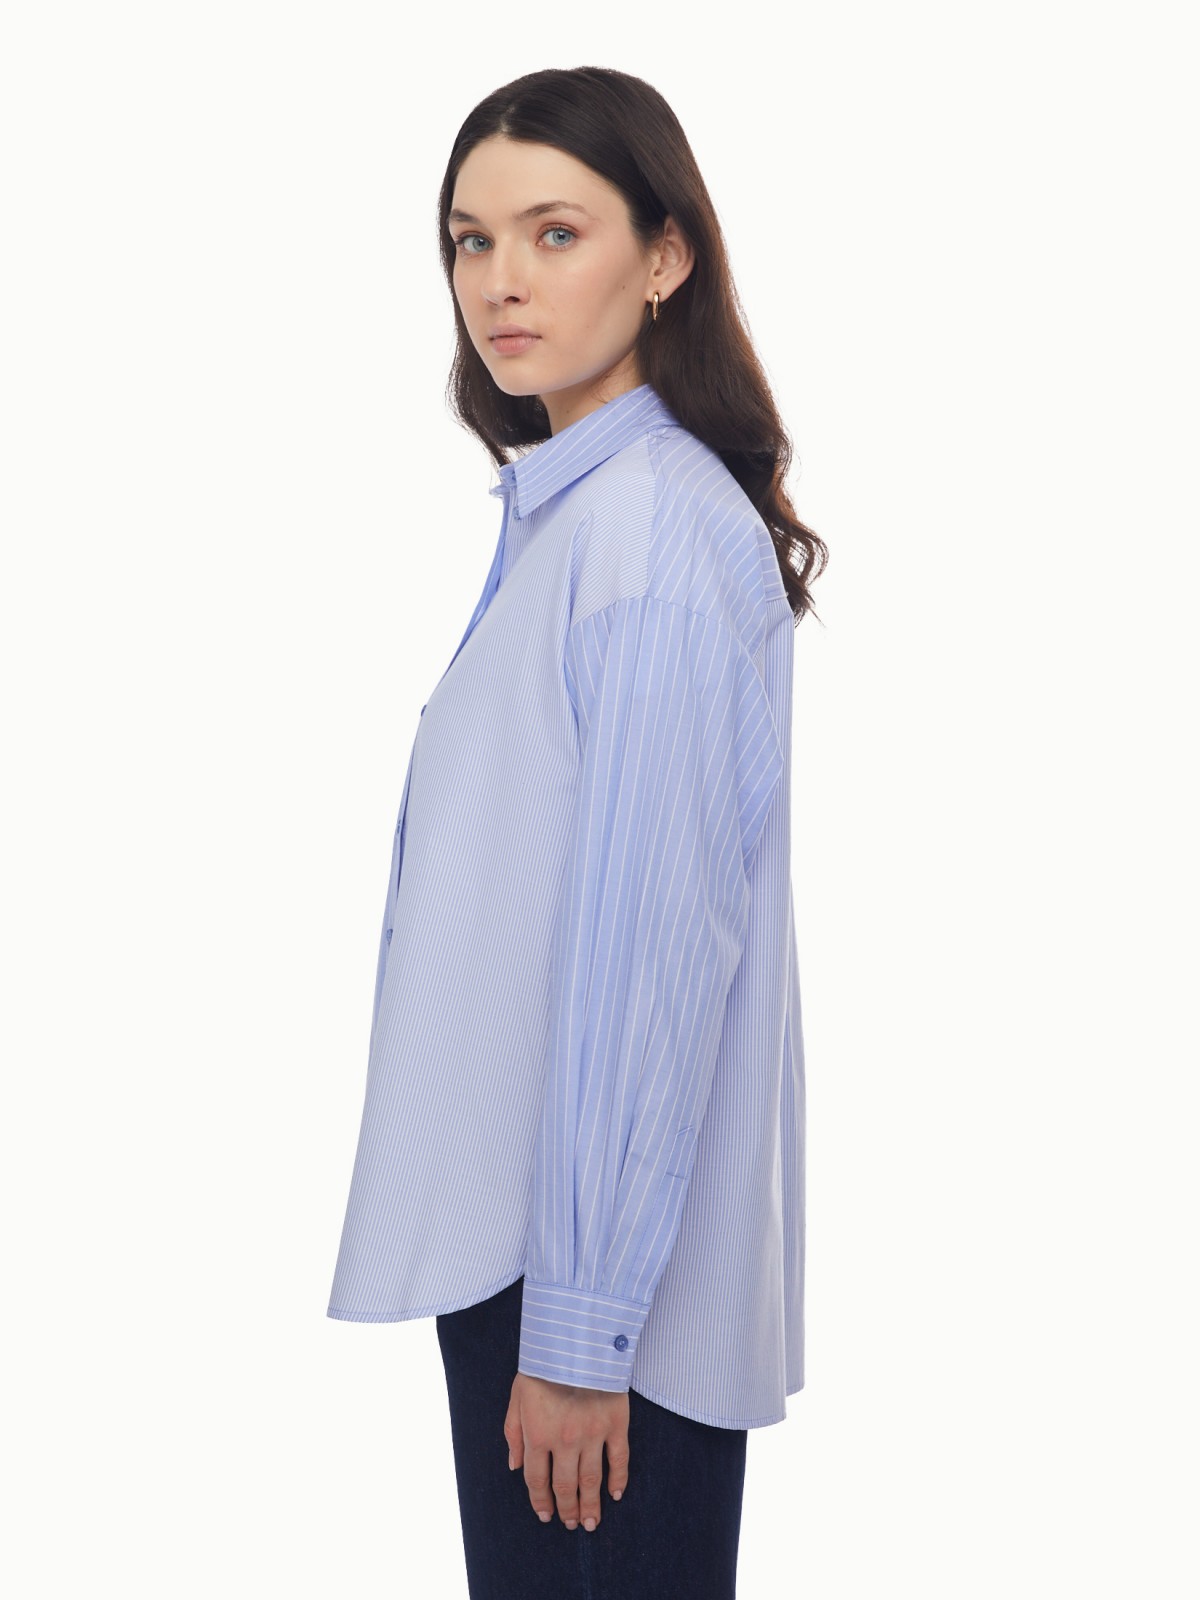 Рубашка оверсайз силуэта с узором в полоску zolla 024131159342, цвет светло-голубой, размер XS - фото 6